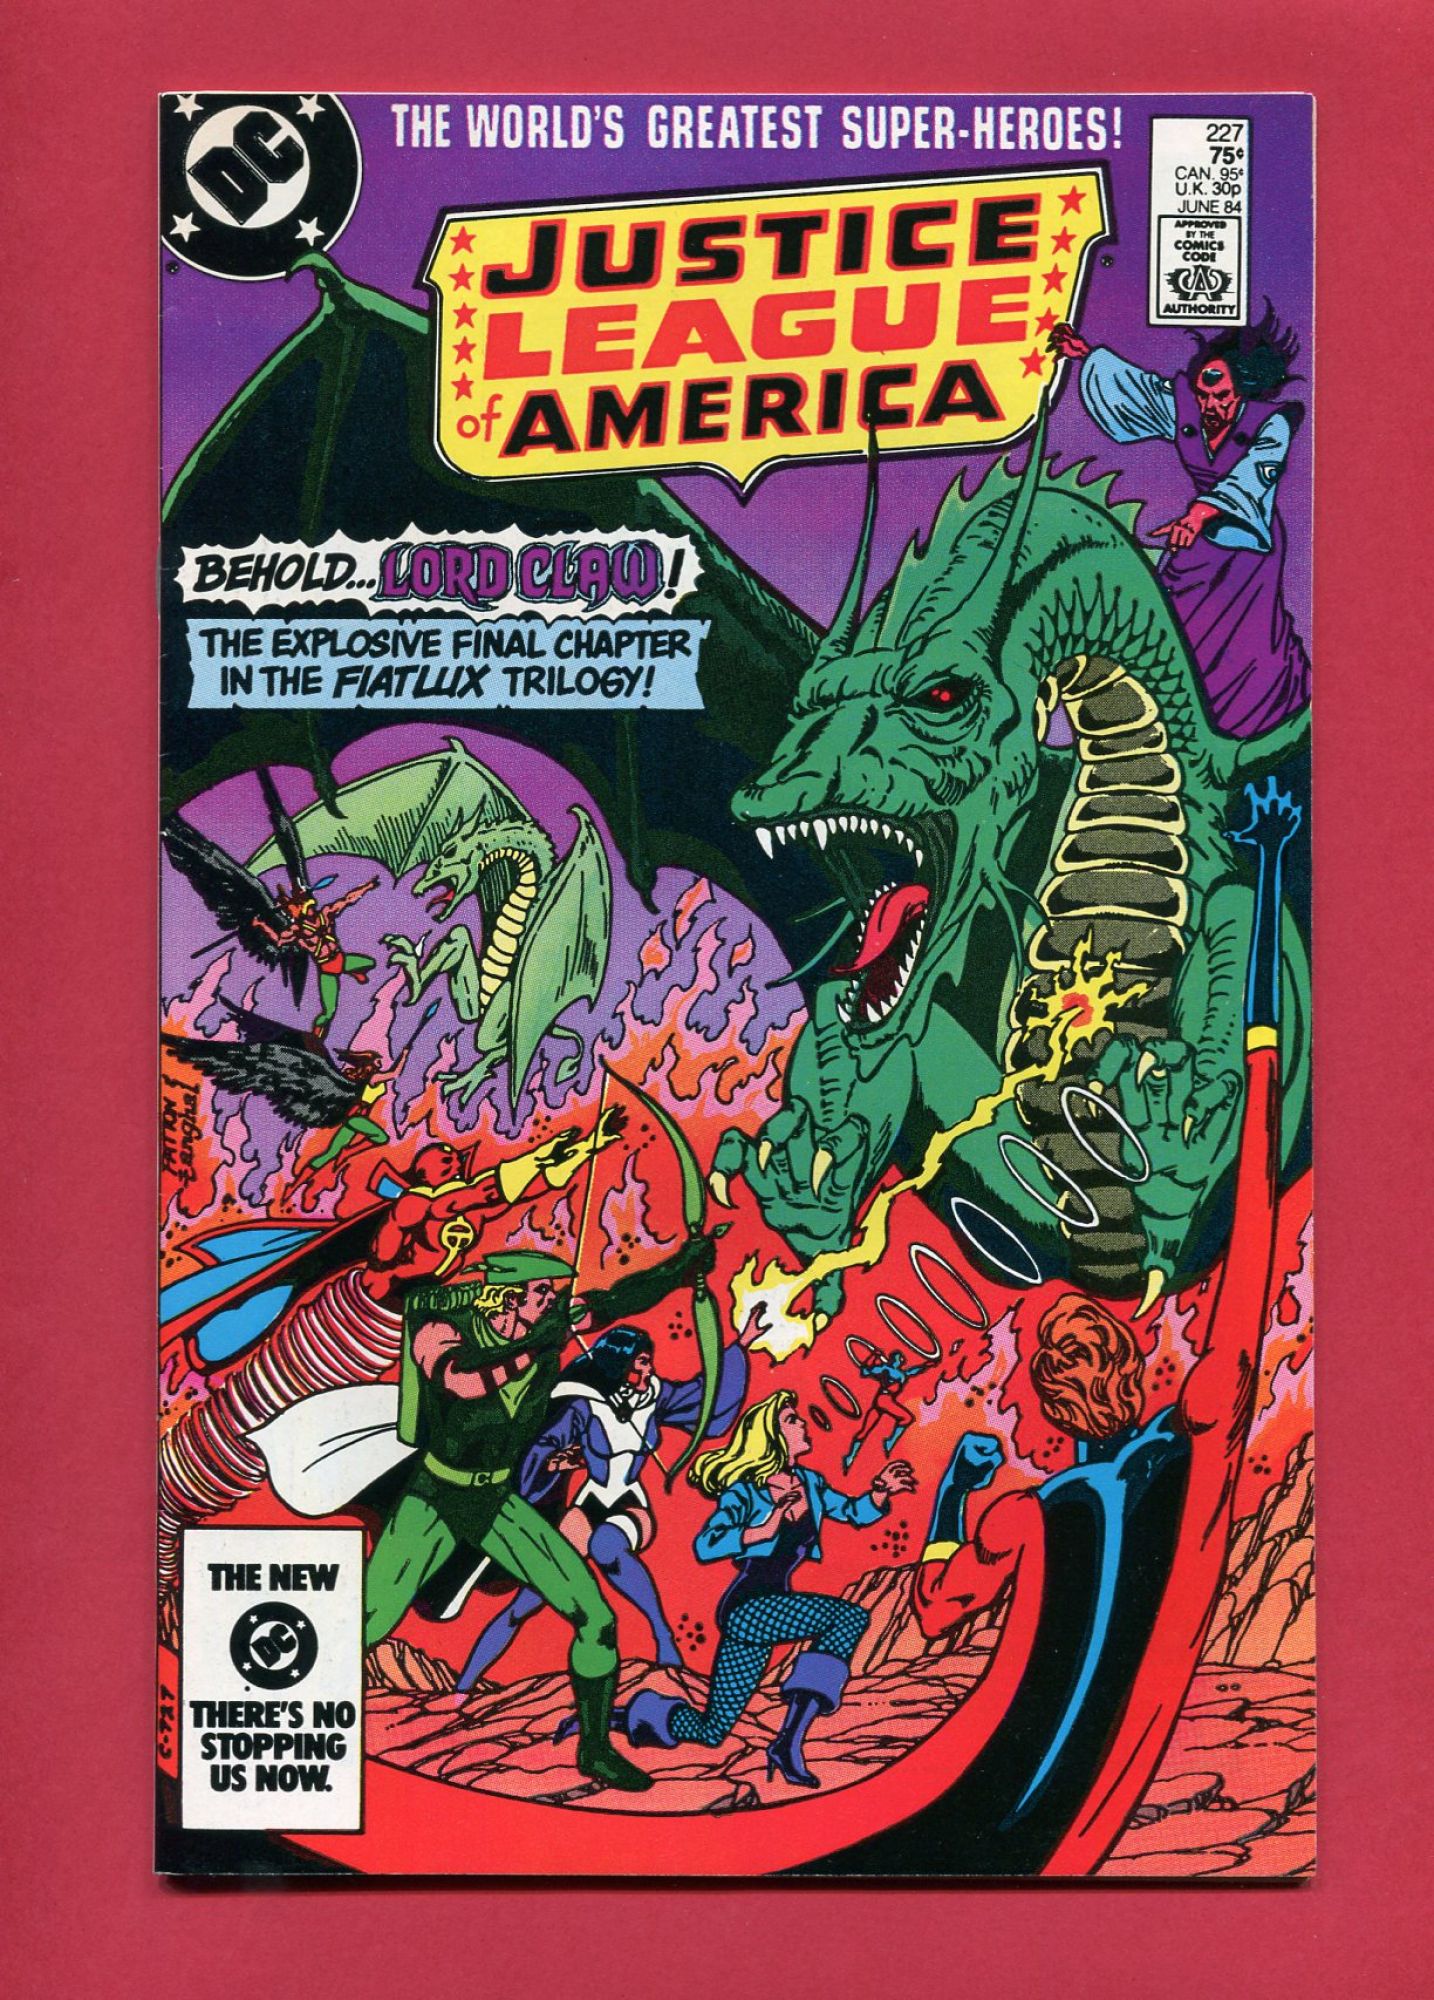 Justice League of America (Volume 1 1960) #227, Jun 1984, 9.0 VF/NM